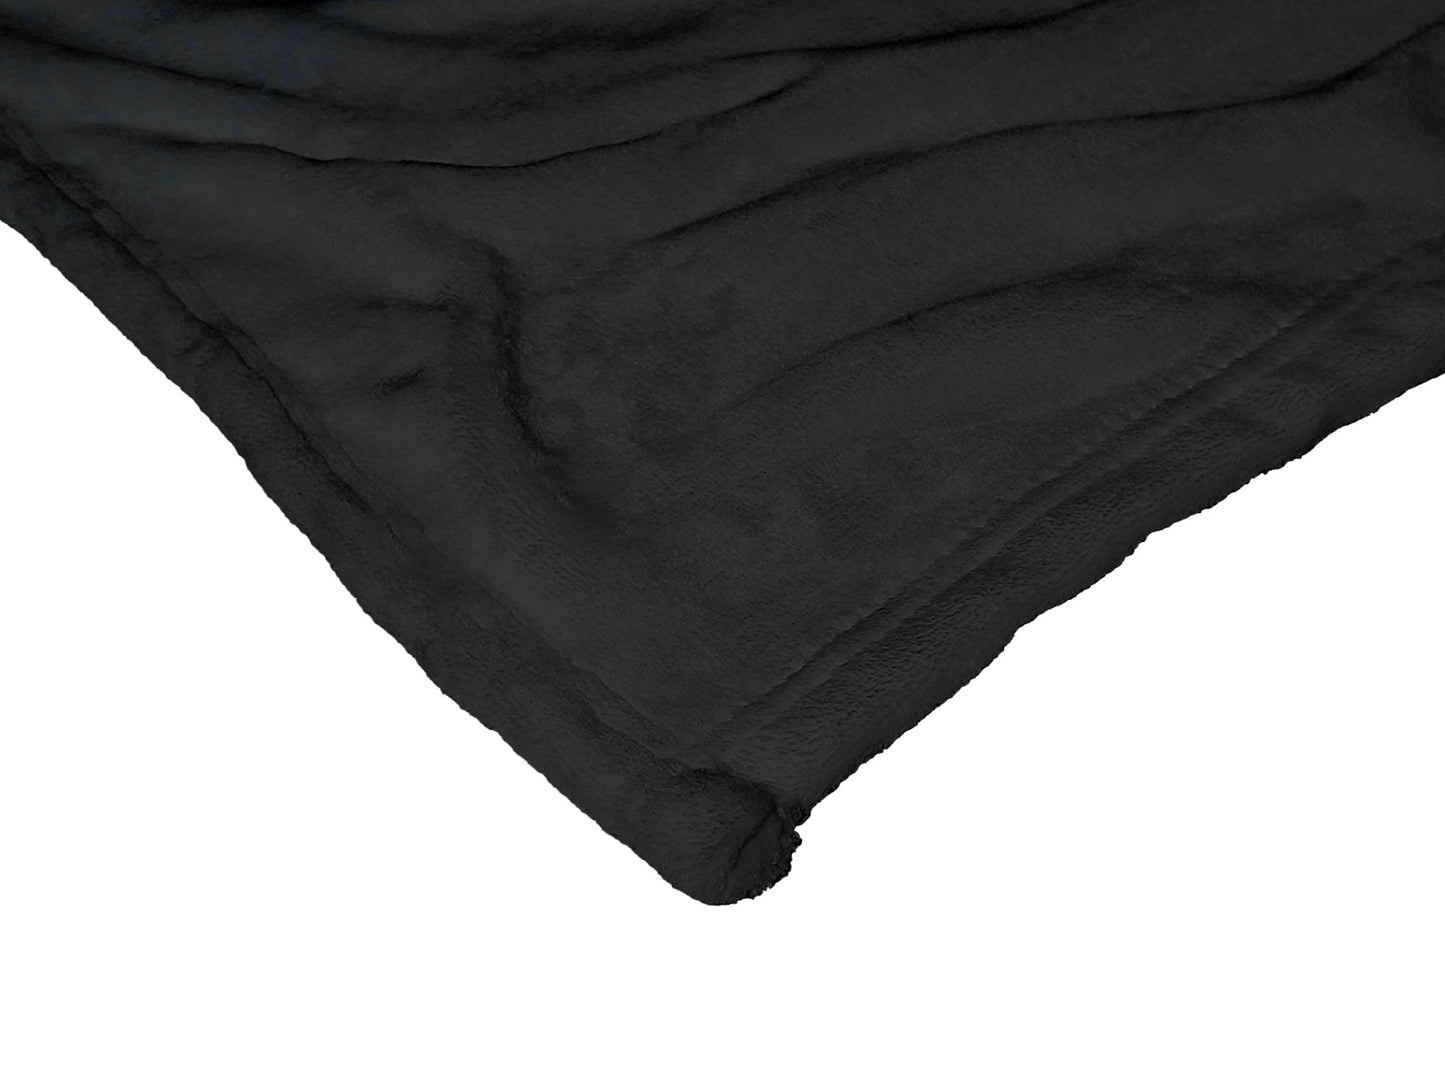 Harry Potter Aggretsuko Comics Silk Touch Throw Blanket; 50" x 60"